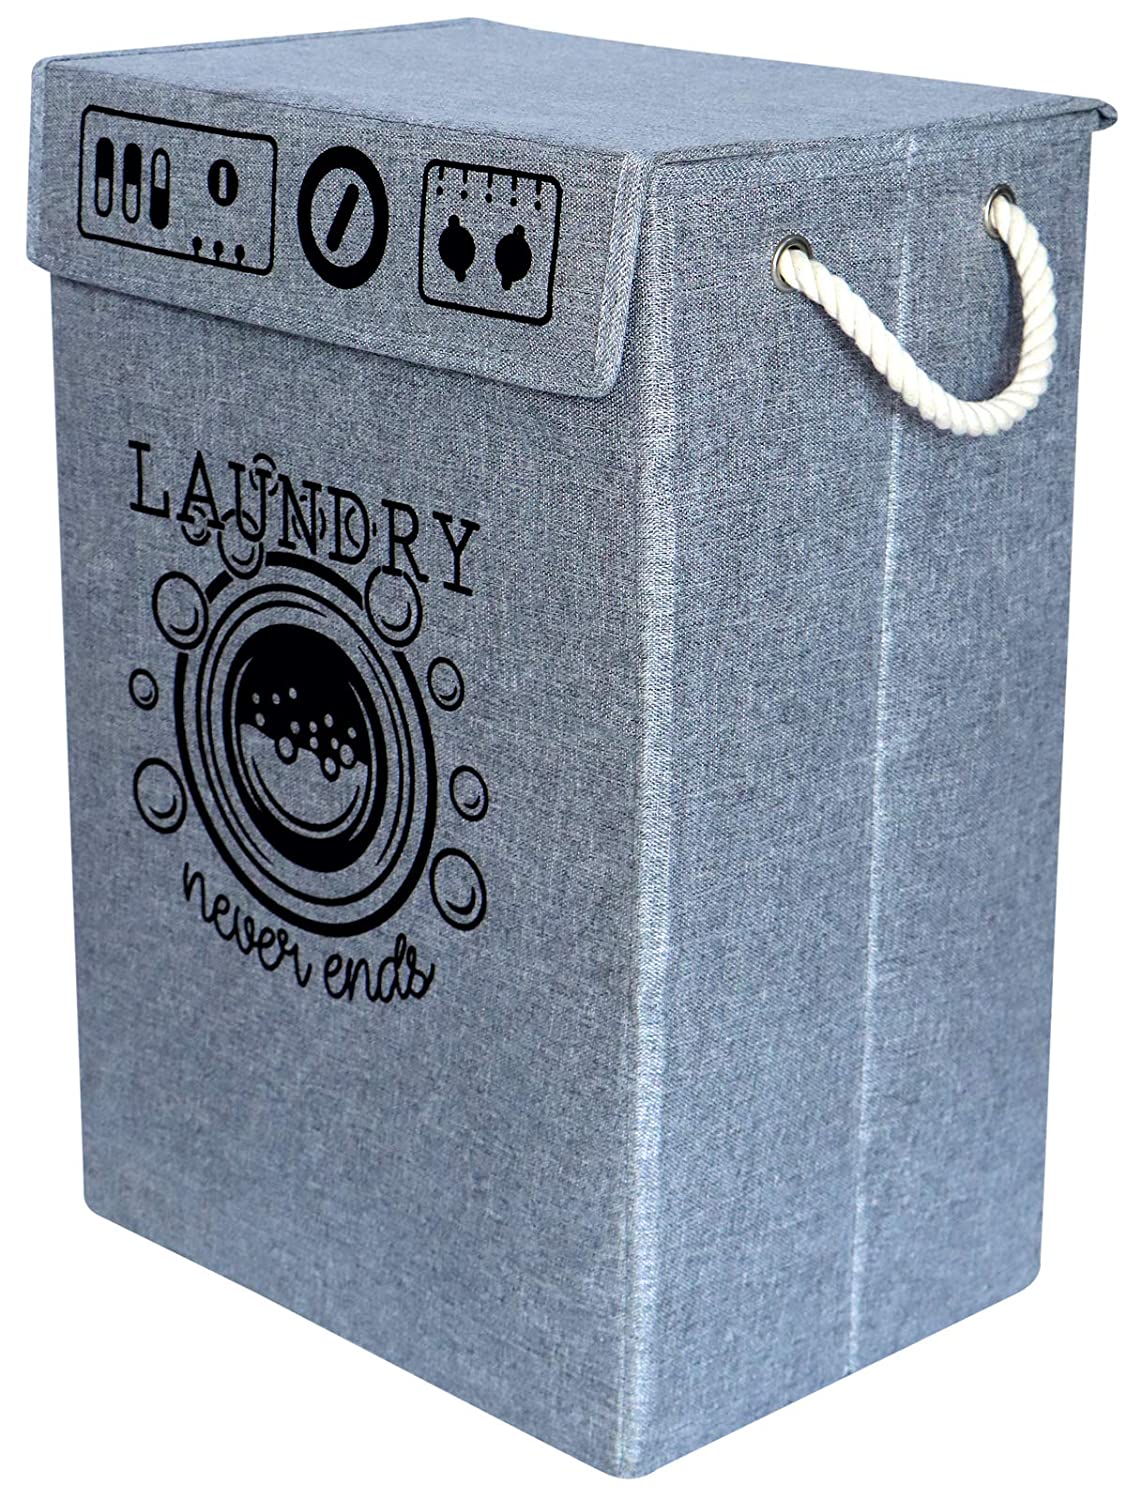 loomsmith-foldable-laundry-basket-with-lid-basket-bag-hard-cardboard-72-litres-capacity-grey-color-cloth-organizer